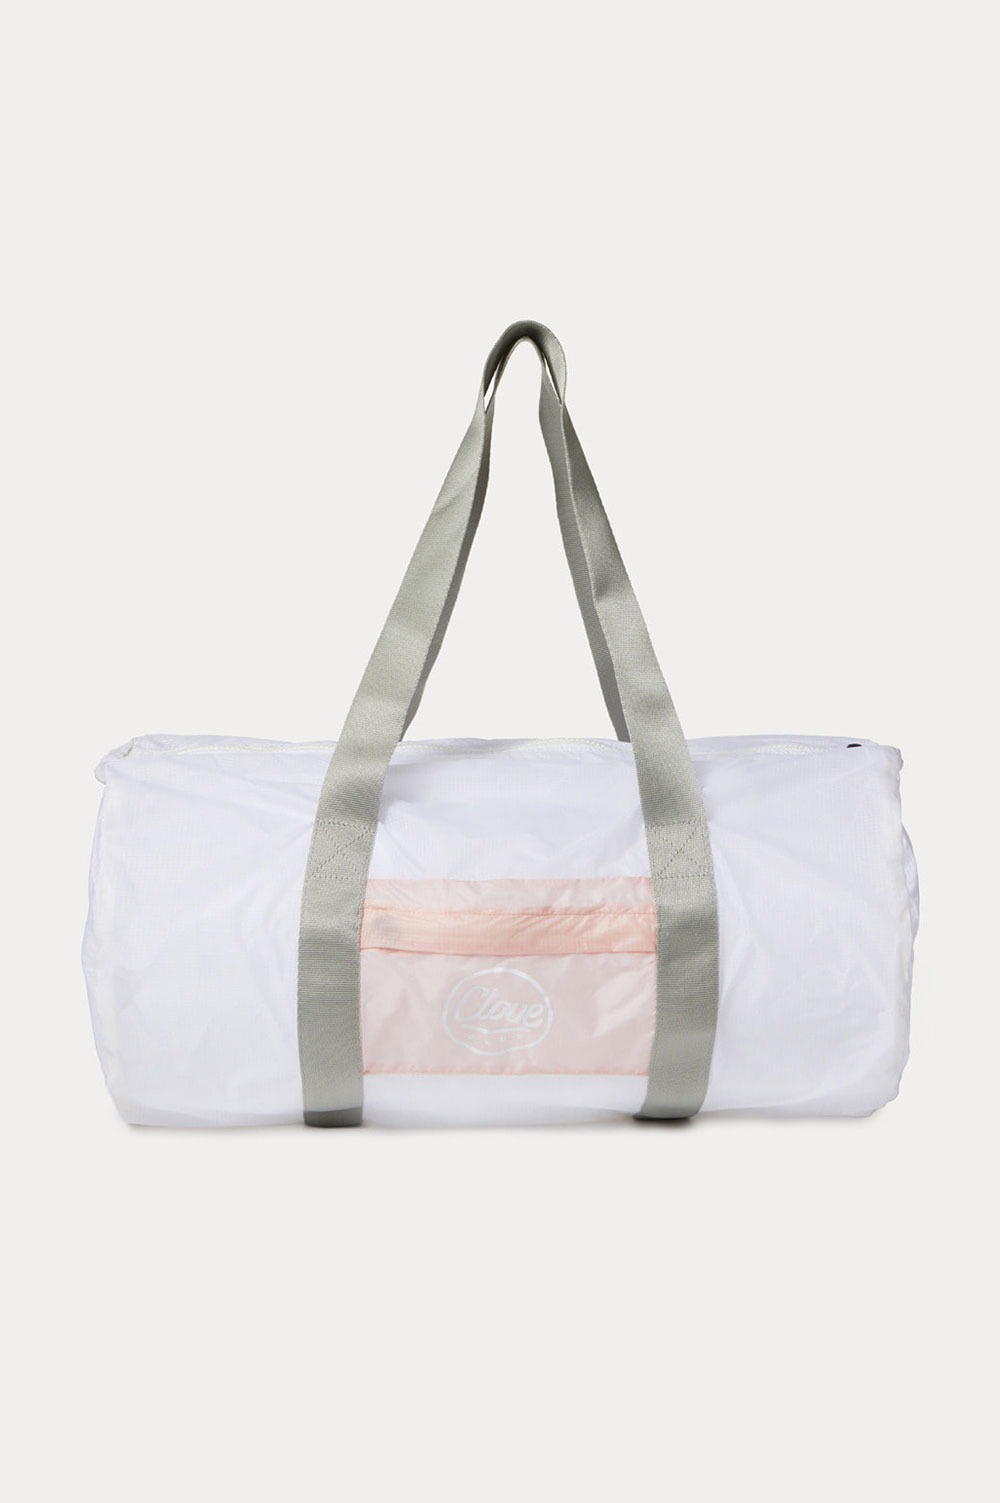 clove - Light Duffle Bag (White)